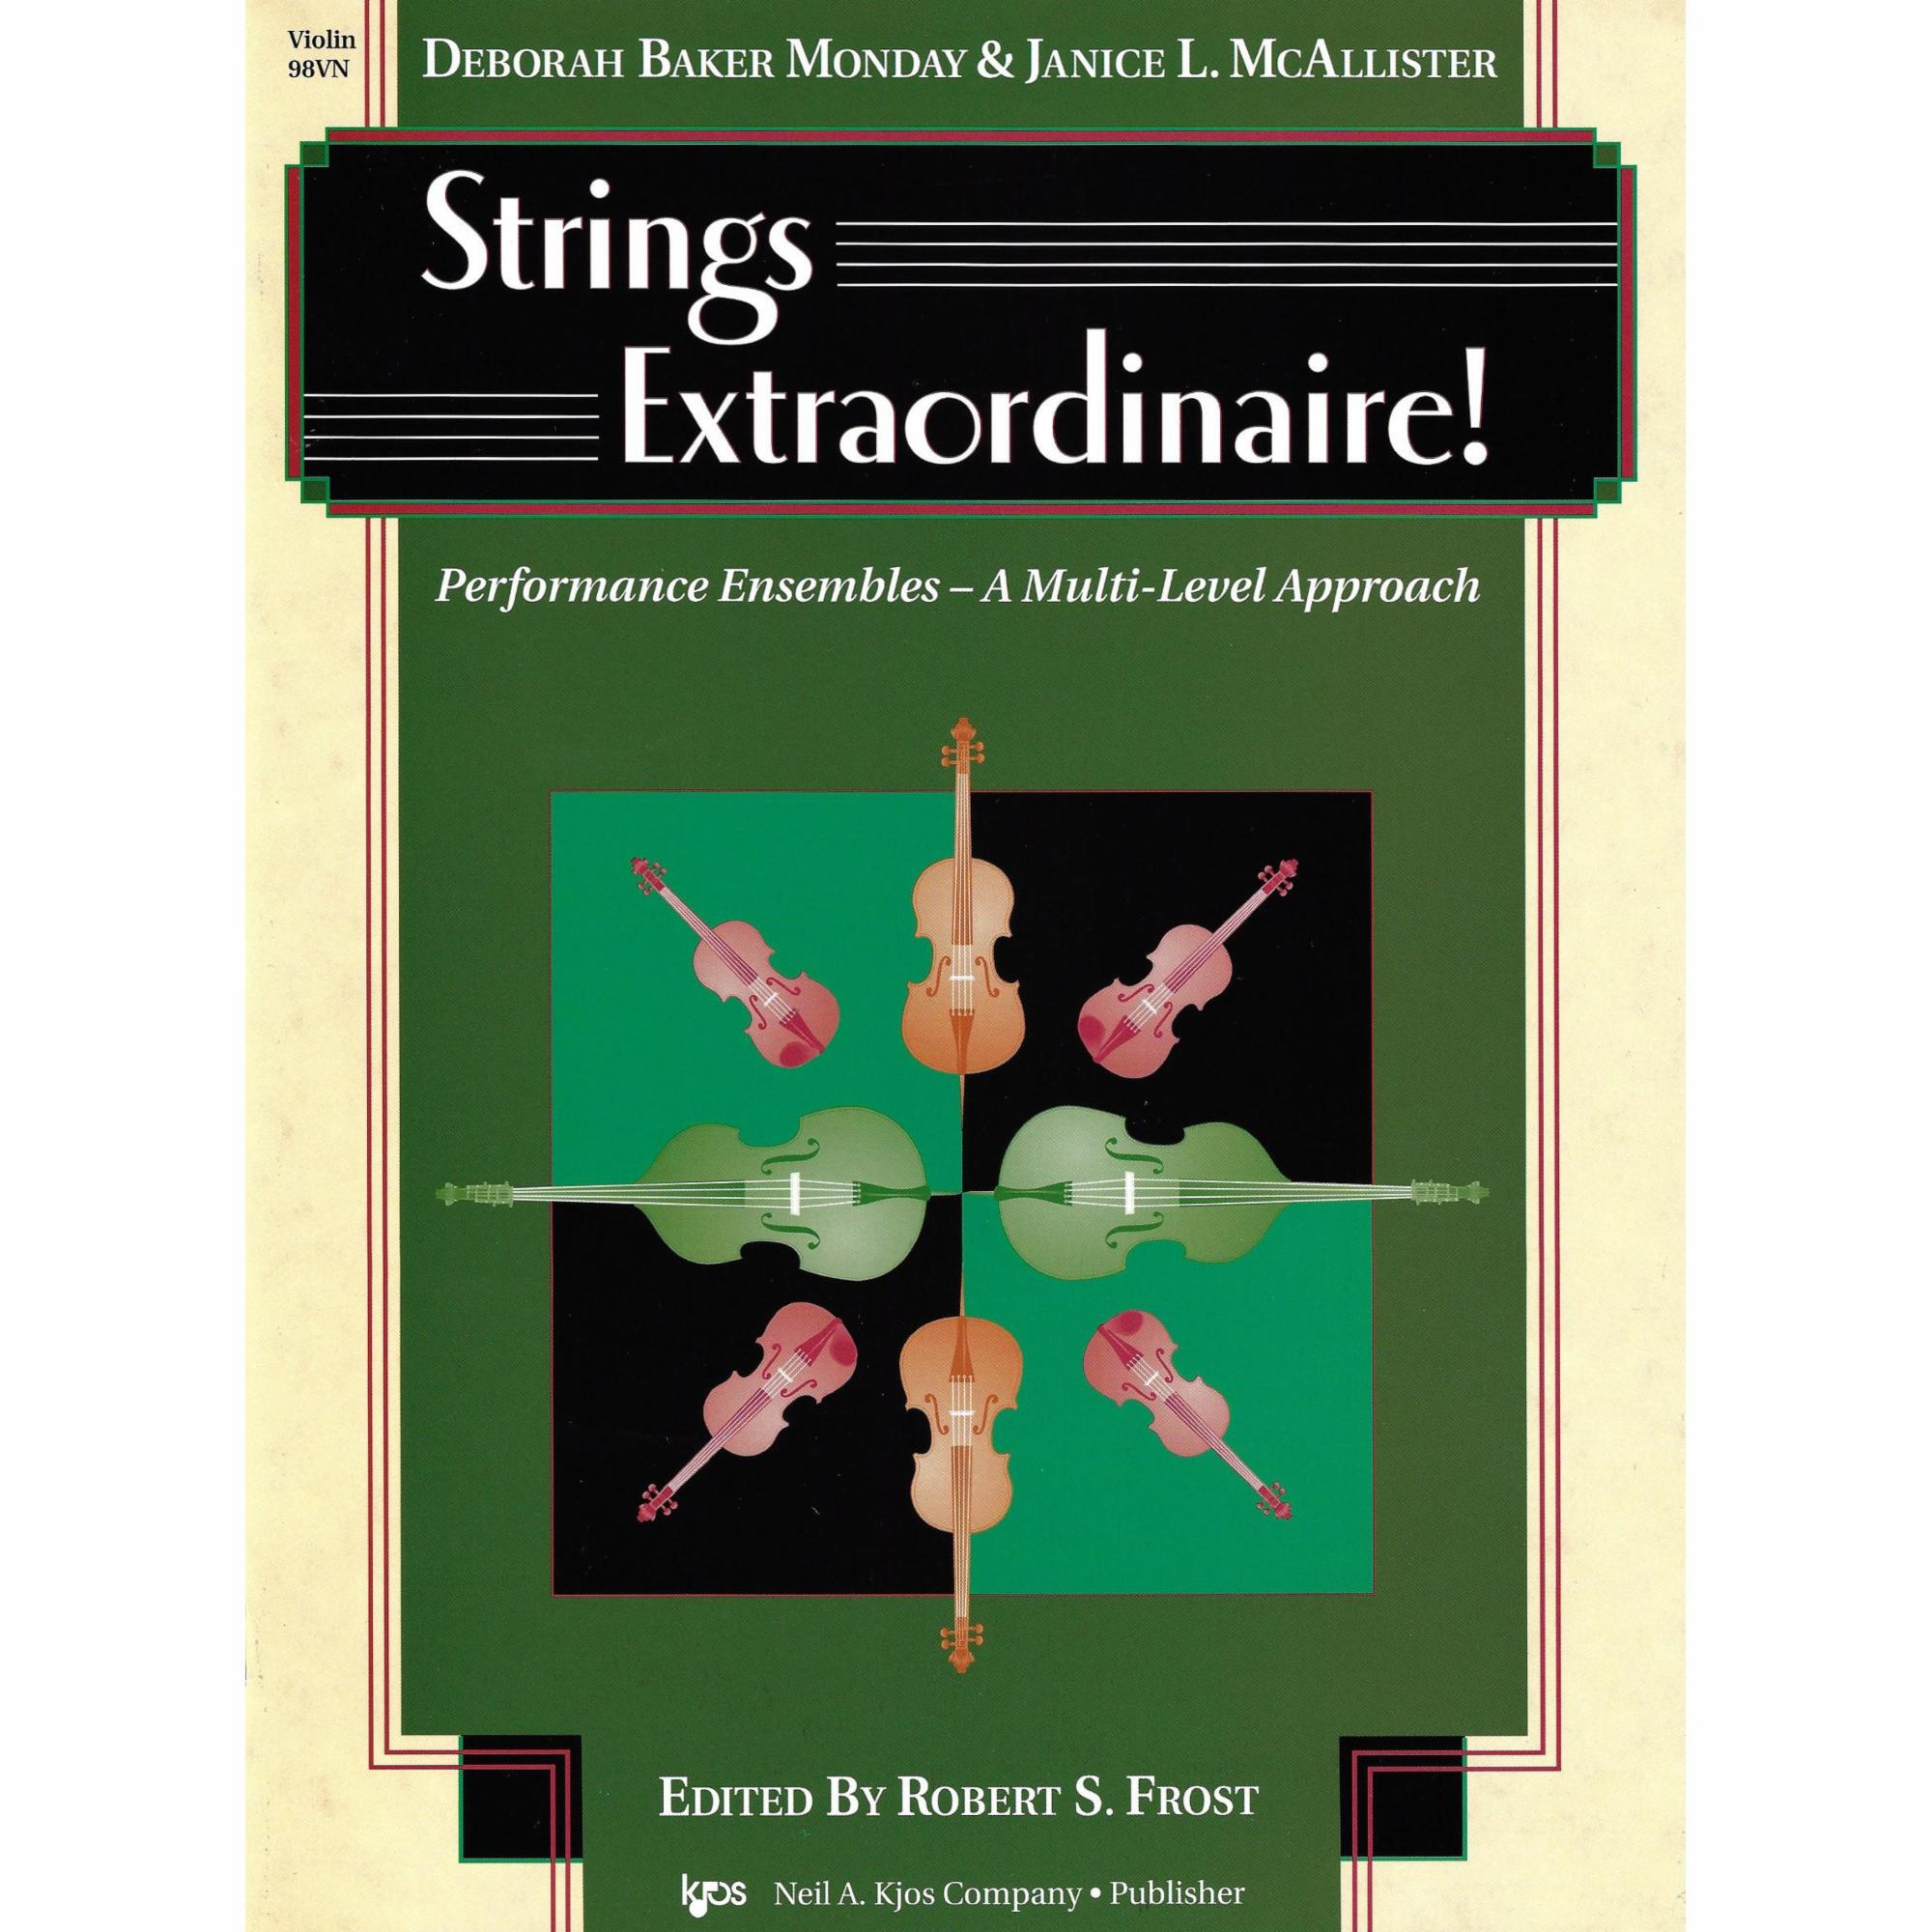 Strings Extraordinaire!